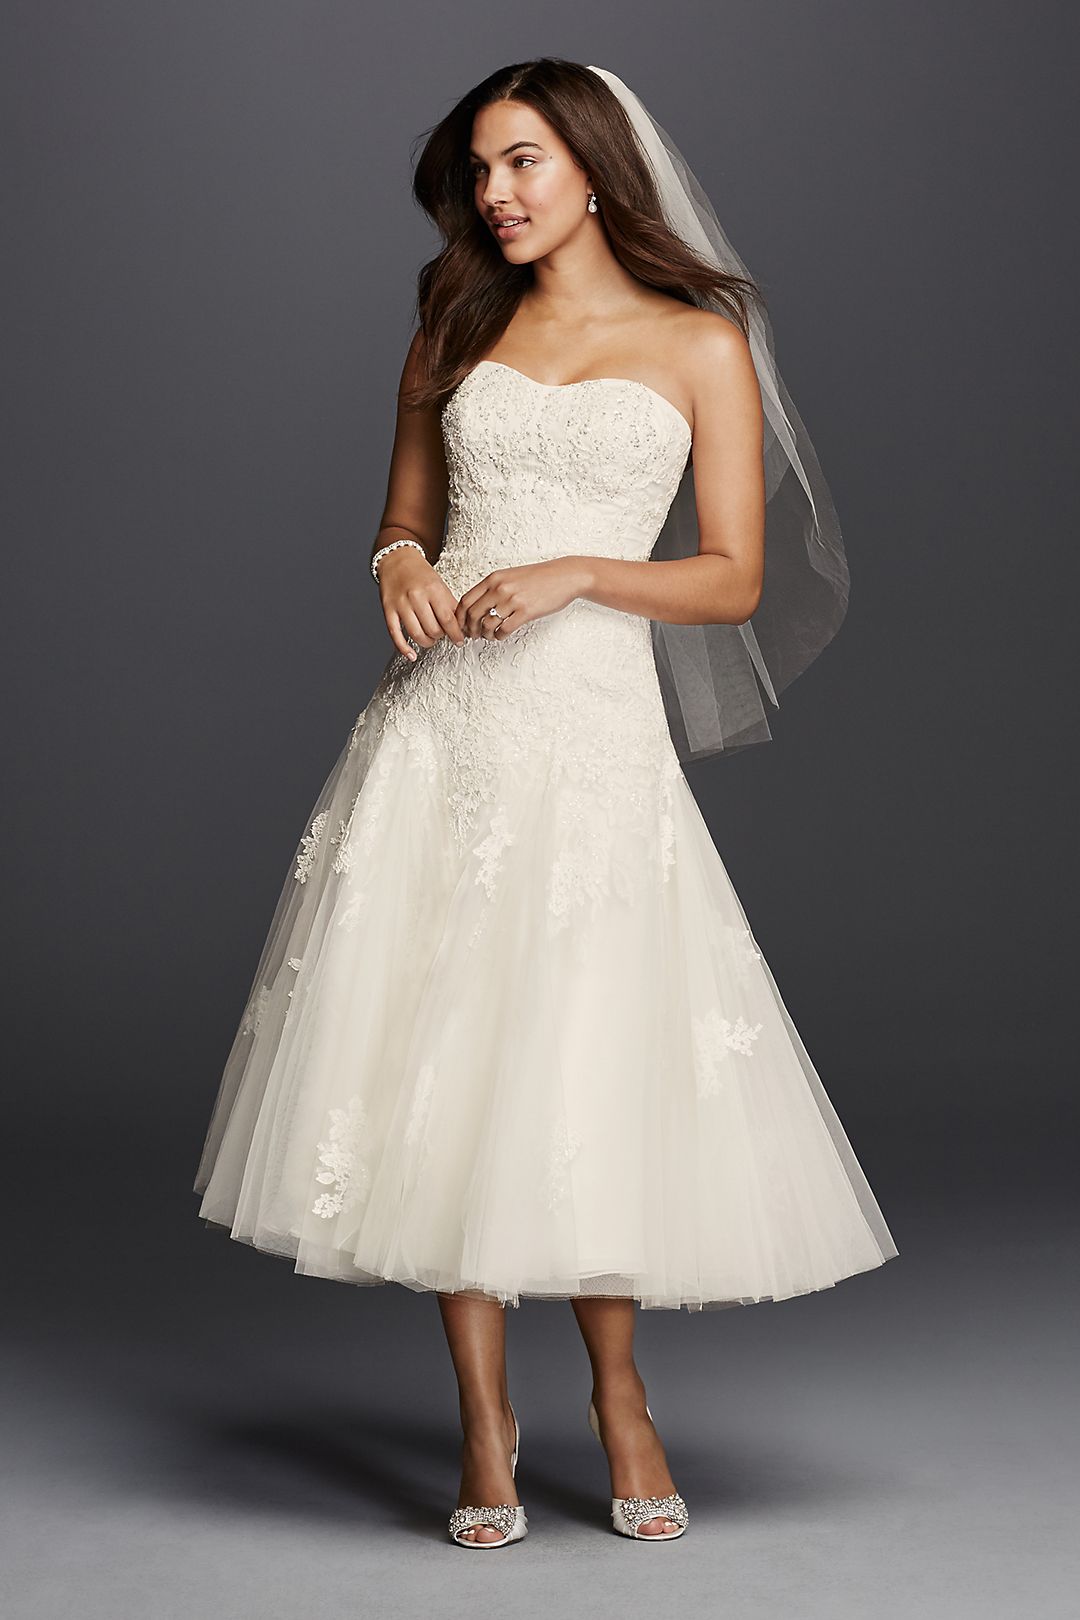 Ayyyeeee!!! @daniellealyanna said yes to the dress! Drop a 🎉🎉🎉 to say  congrats! #thecoordinatedbride #weddingson…